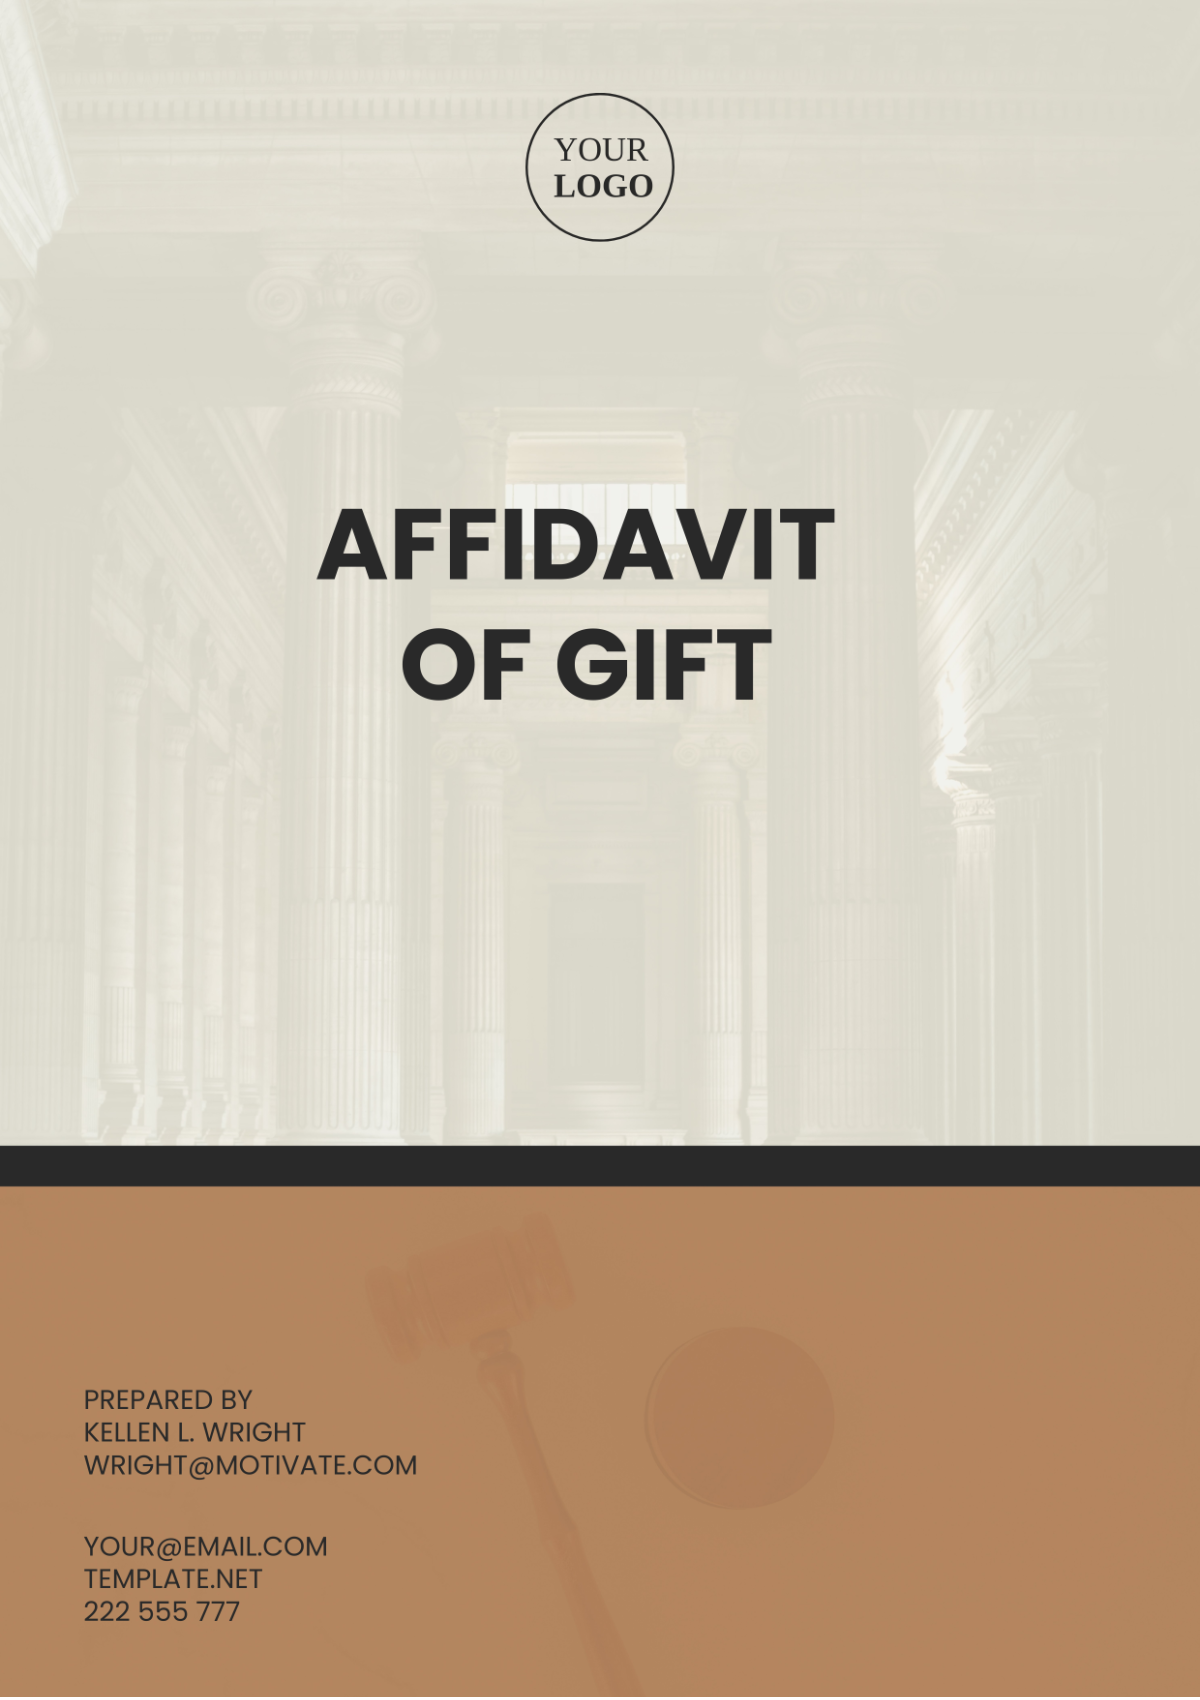 Mississippi Affidavit of Gift Template